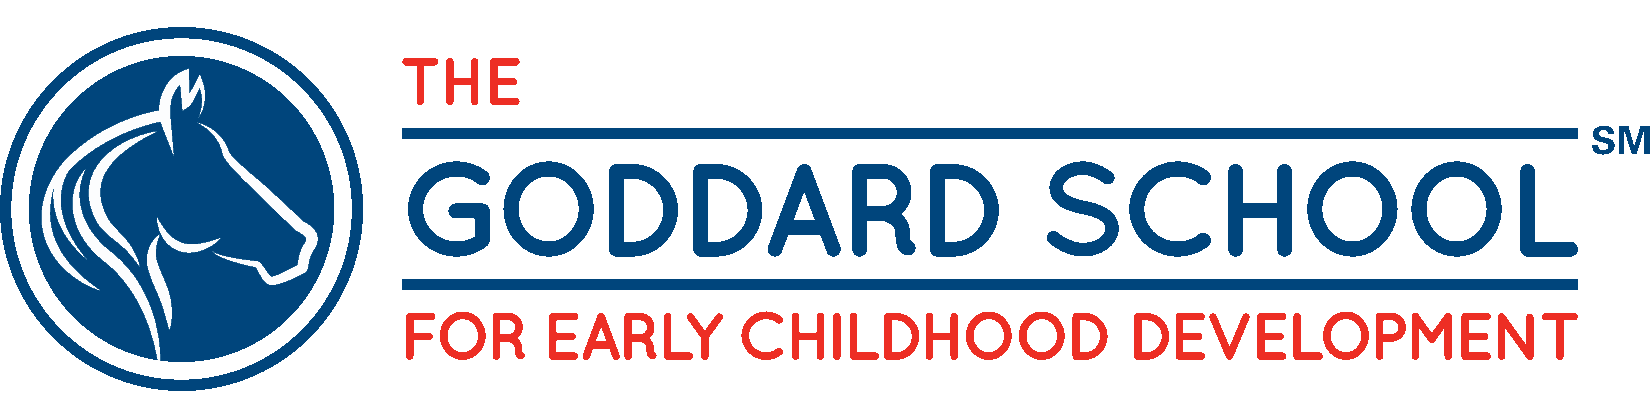 Goddard_School